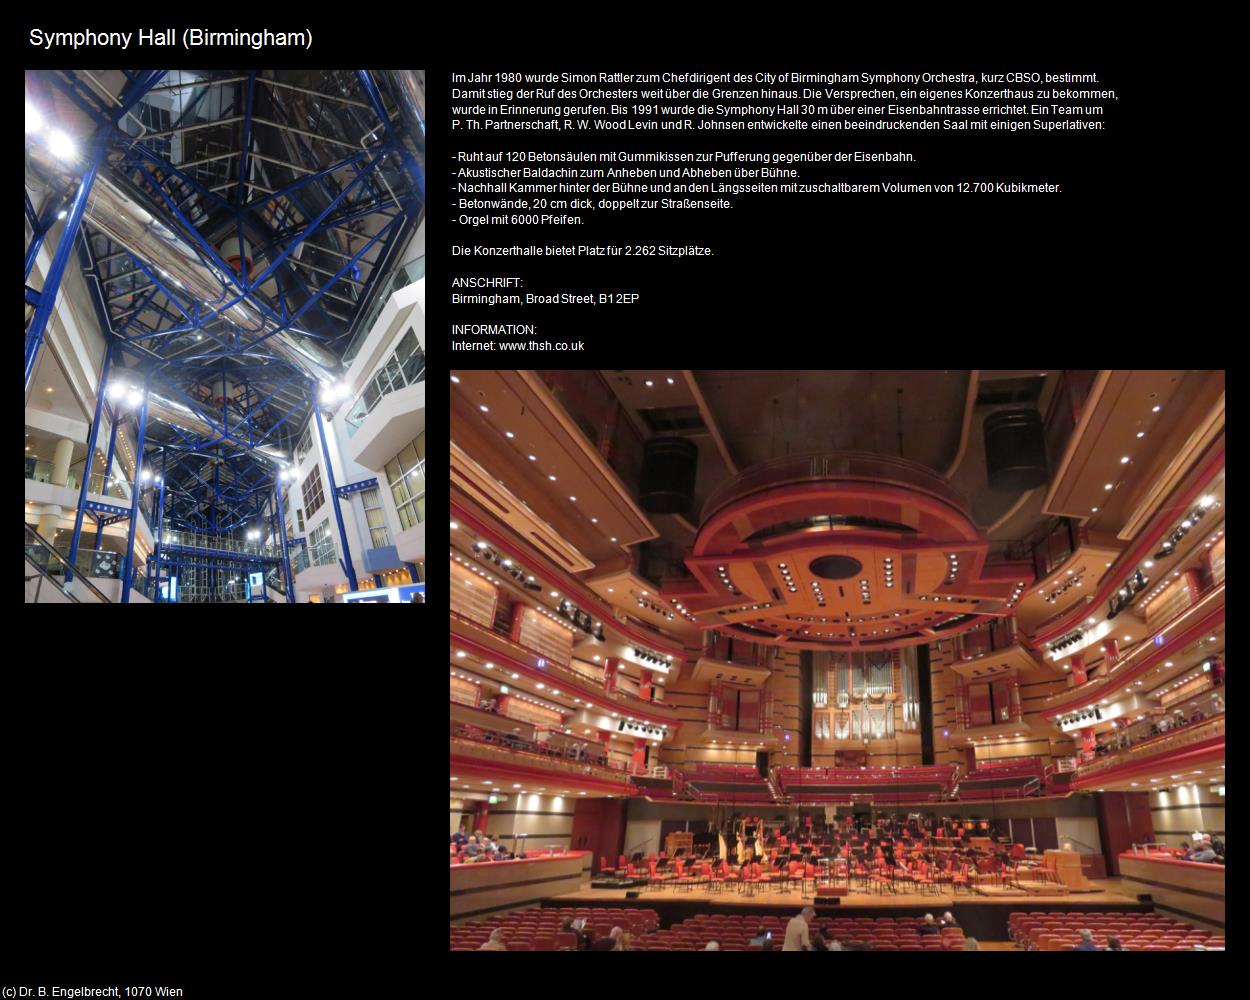 Symphony Hall (Birmingham, England) in Kulturatlas-ENGLAND und WALES